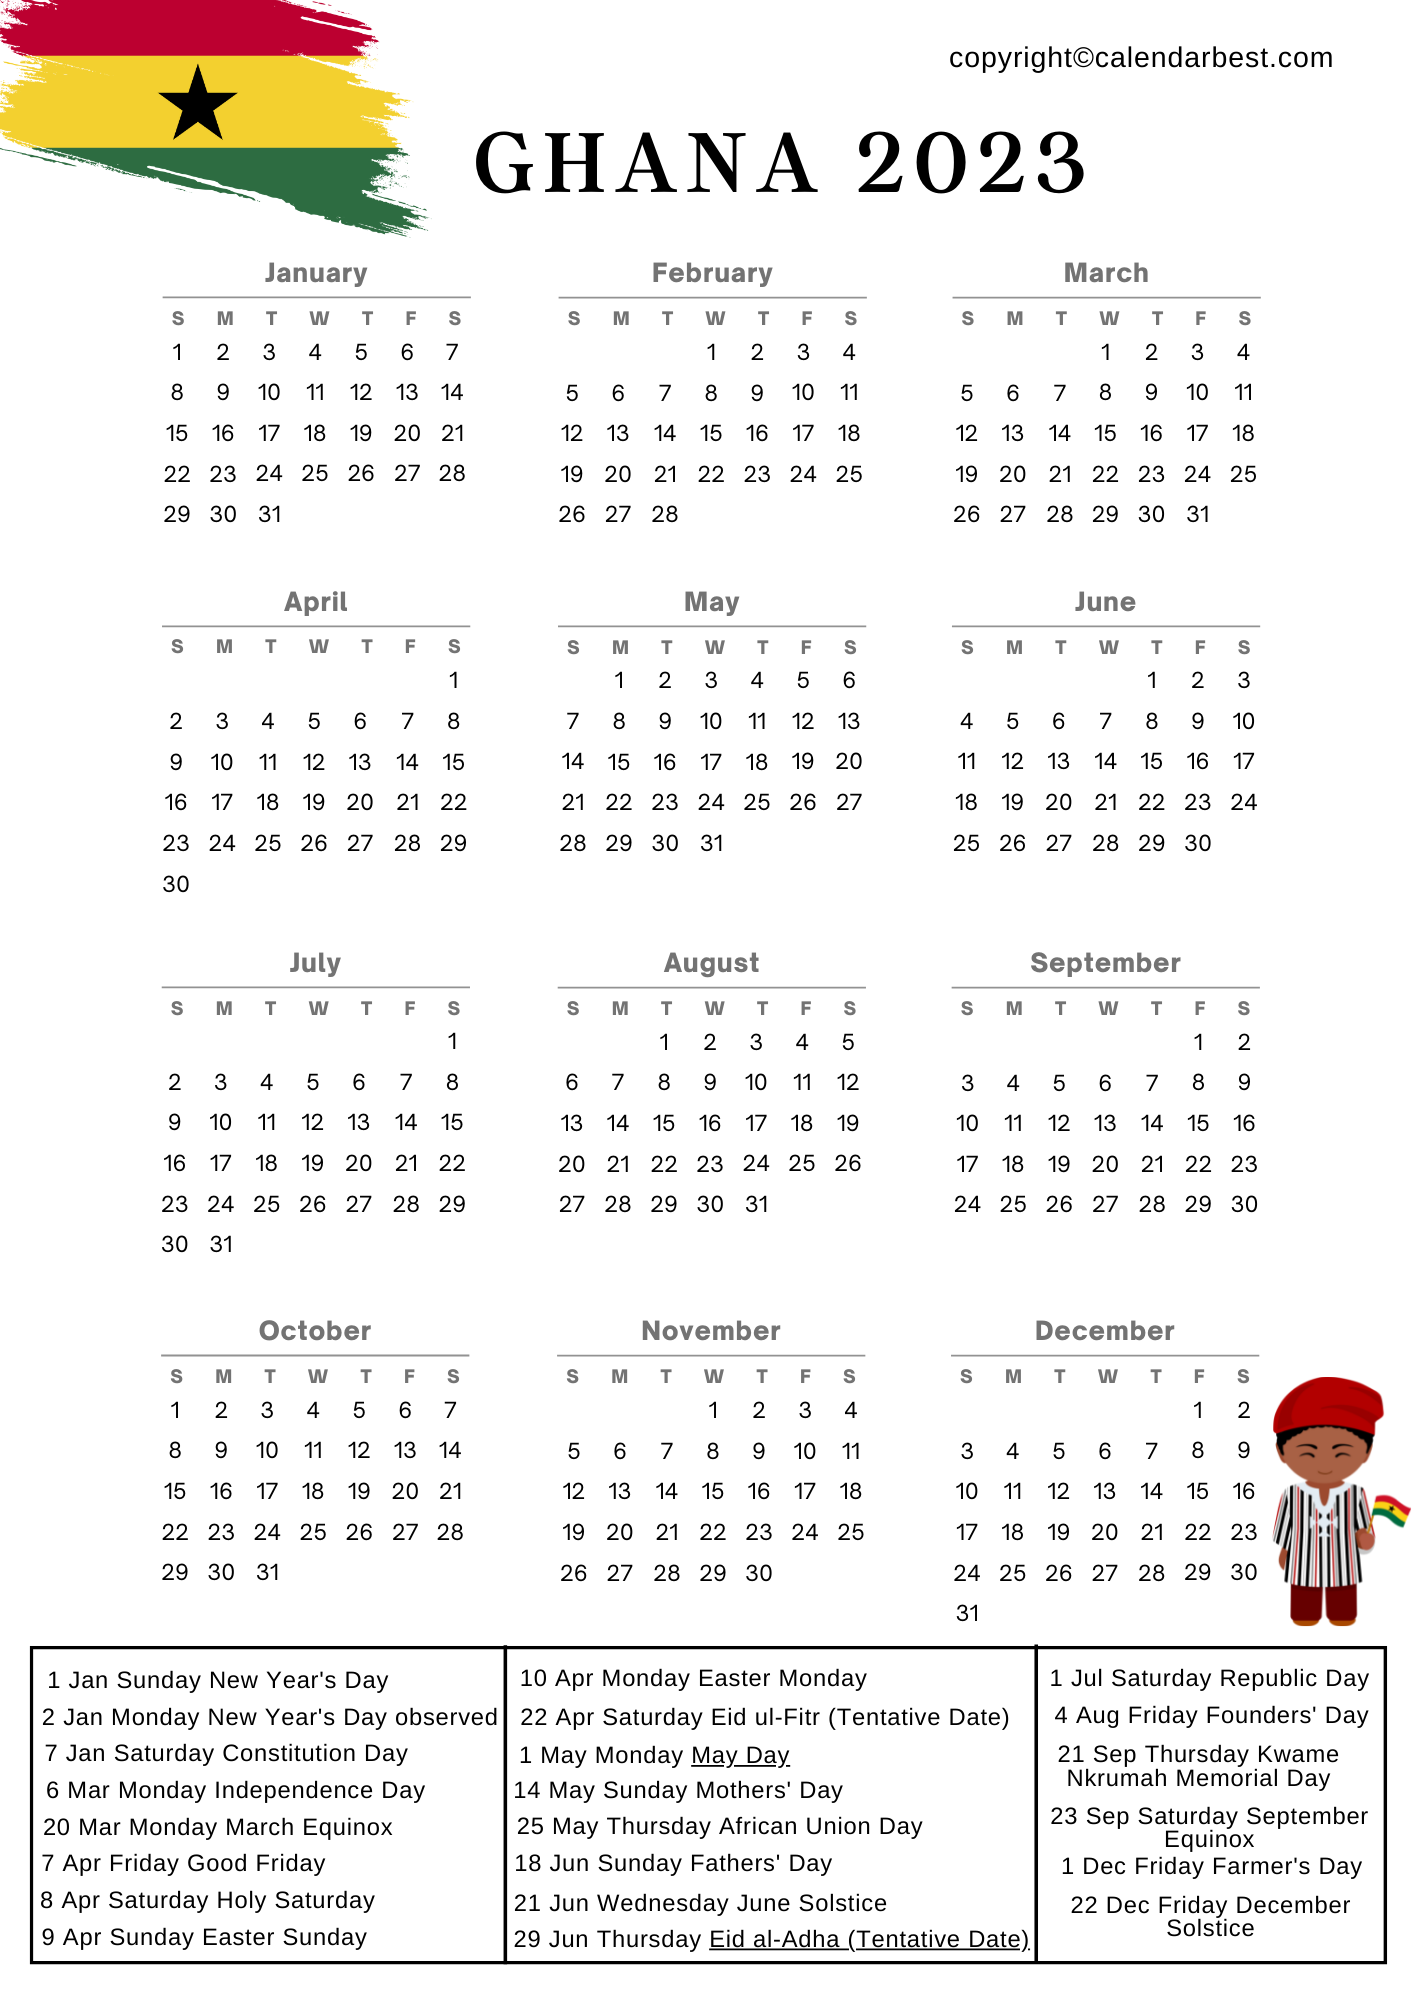 Ghana Calendar 2023 with Holidays Free Printable in PDF